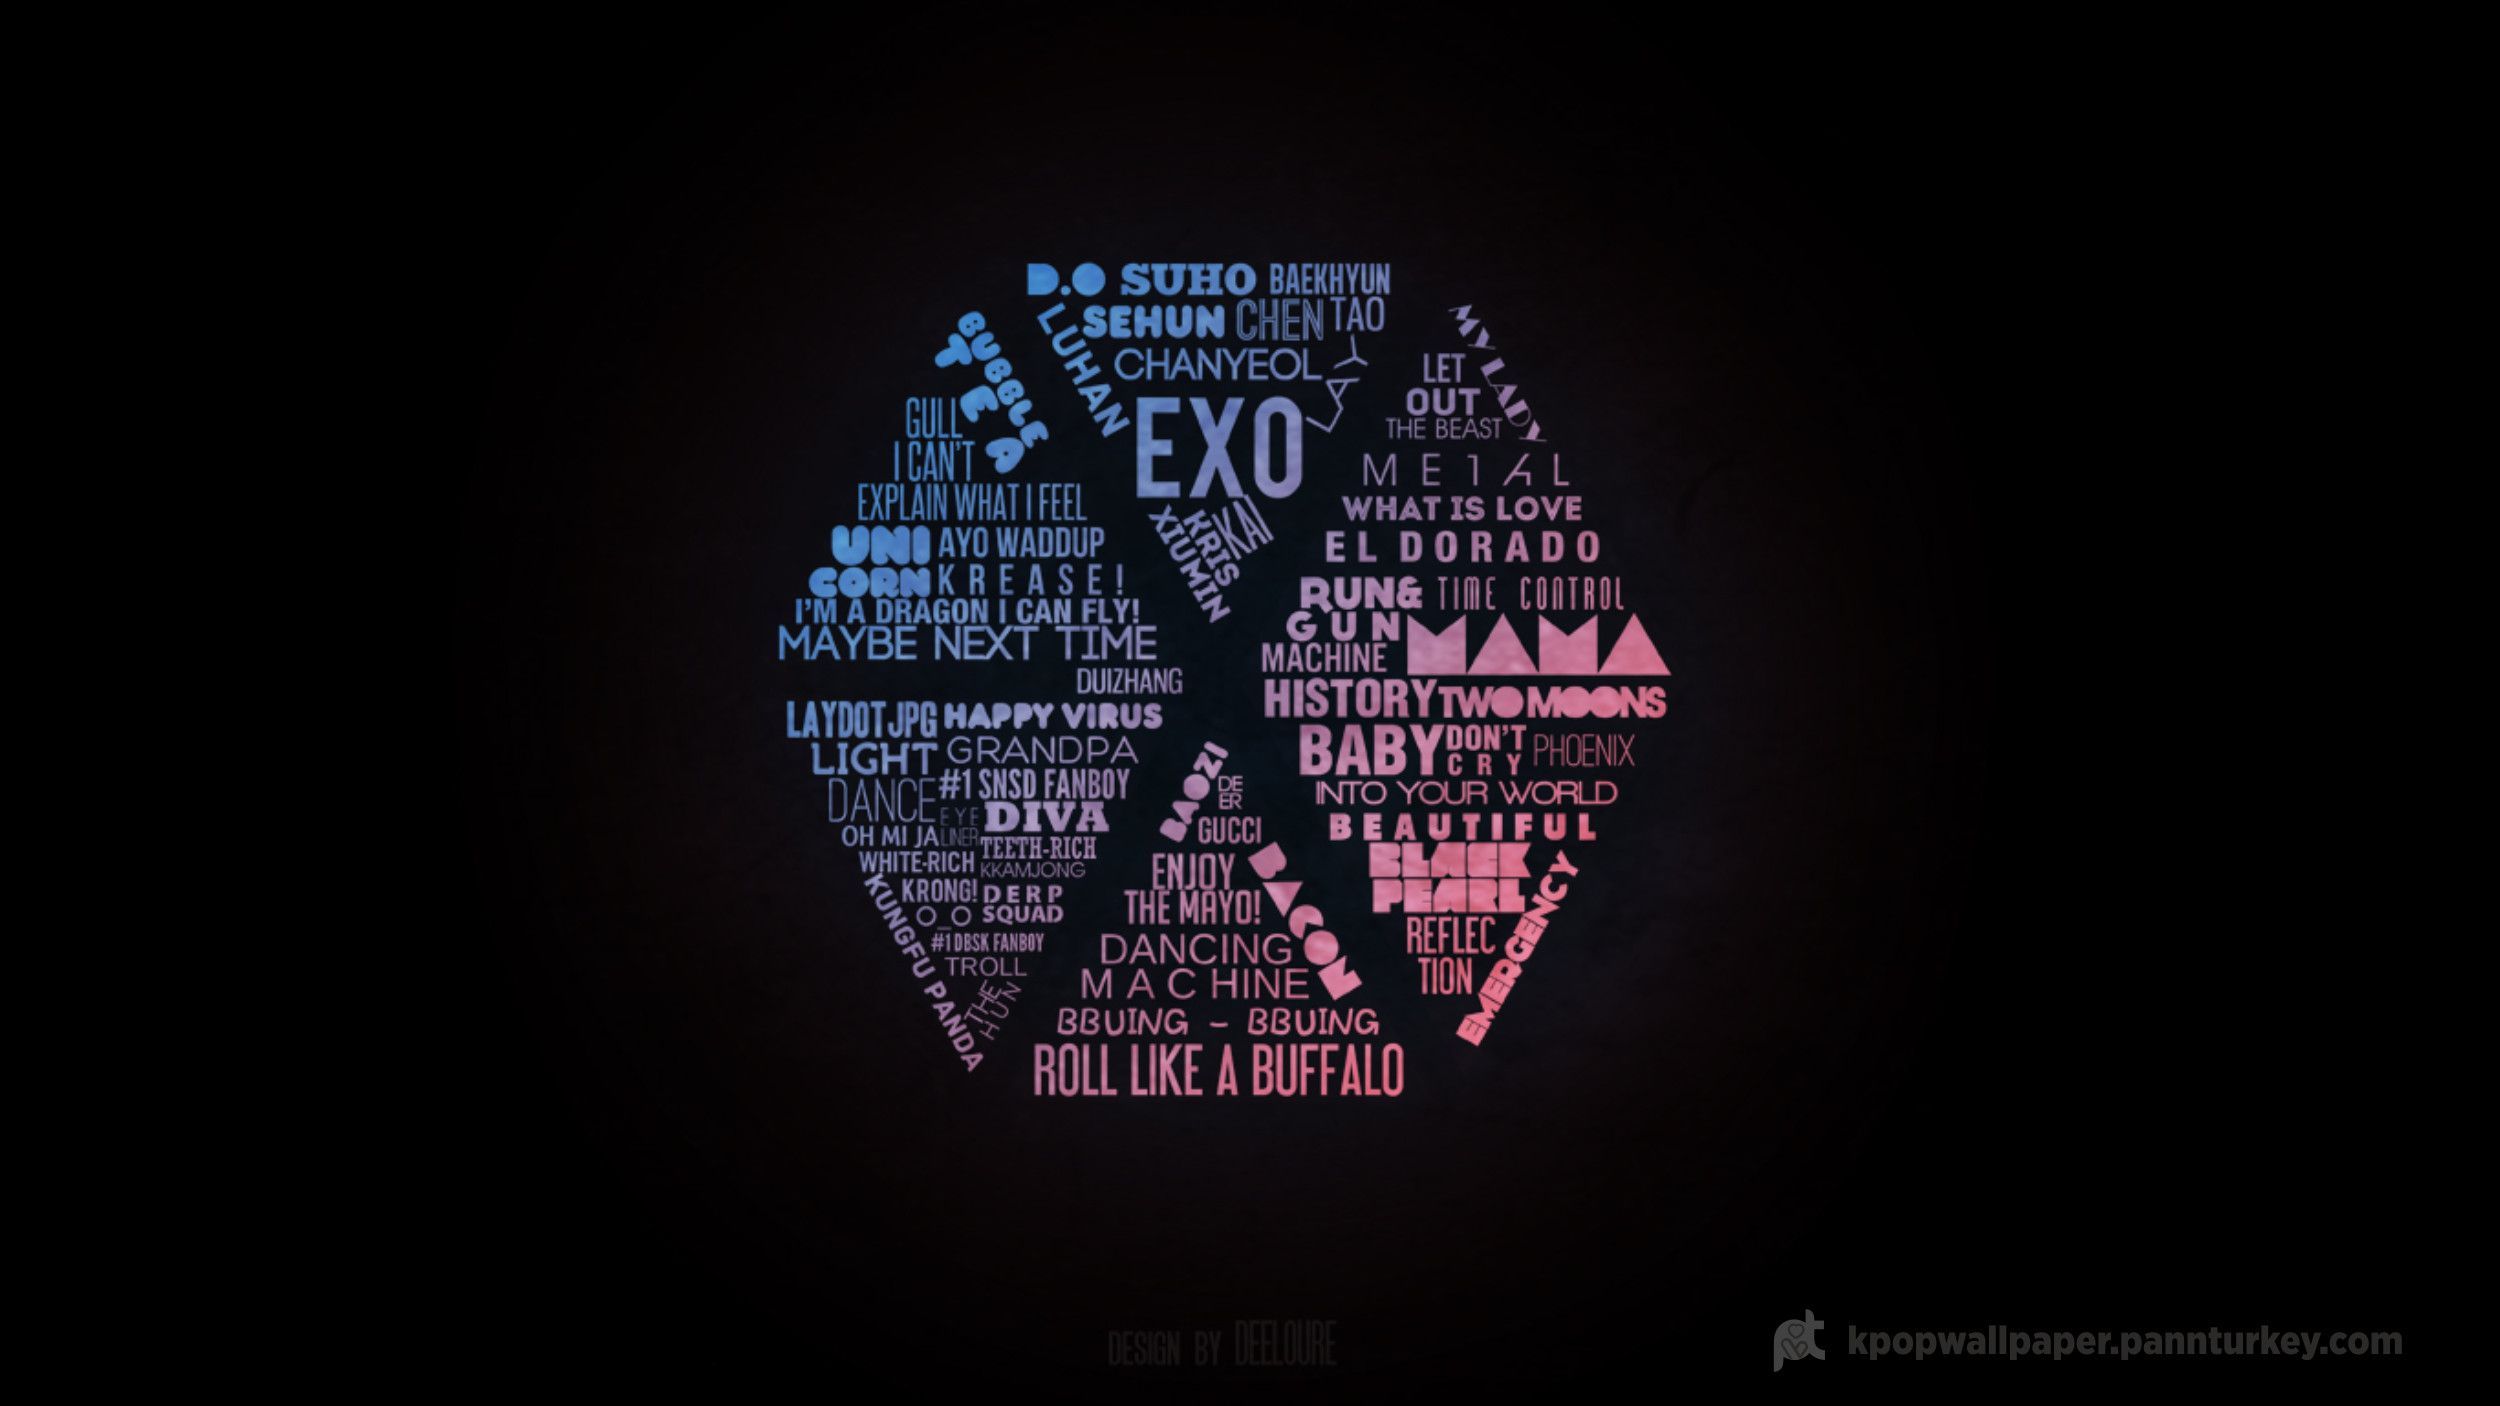 Res: 2500x Exo Logo Wallpaper Full HD Wallpaper. Kpop